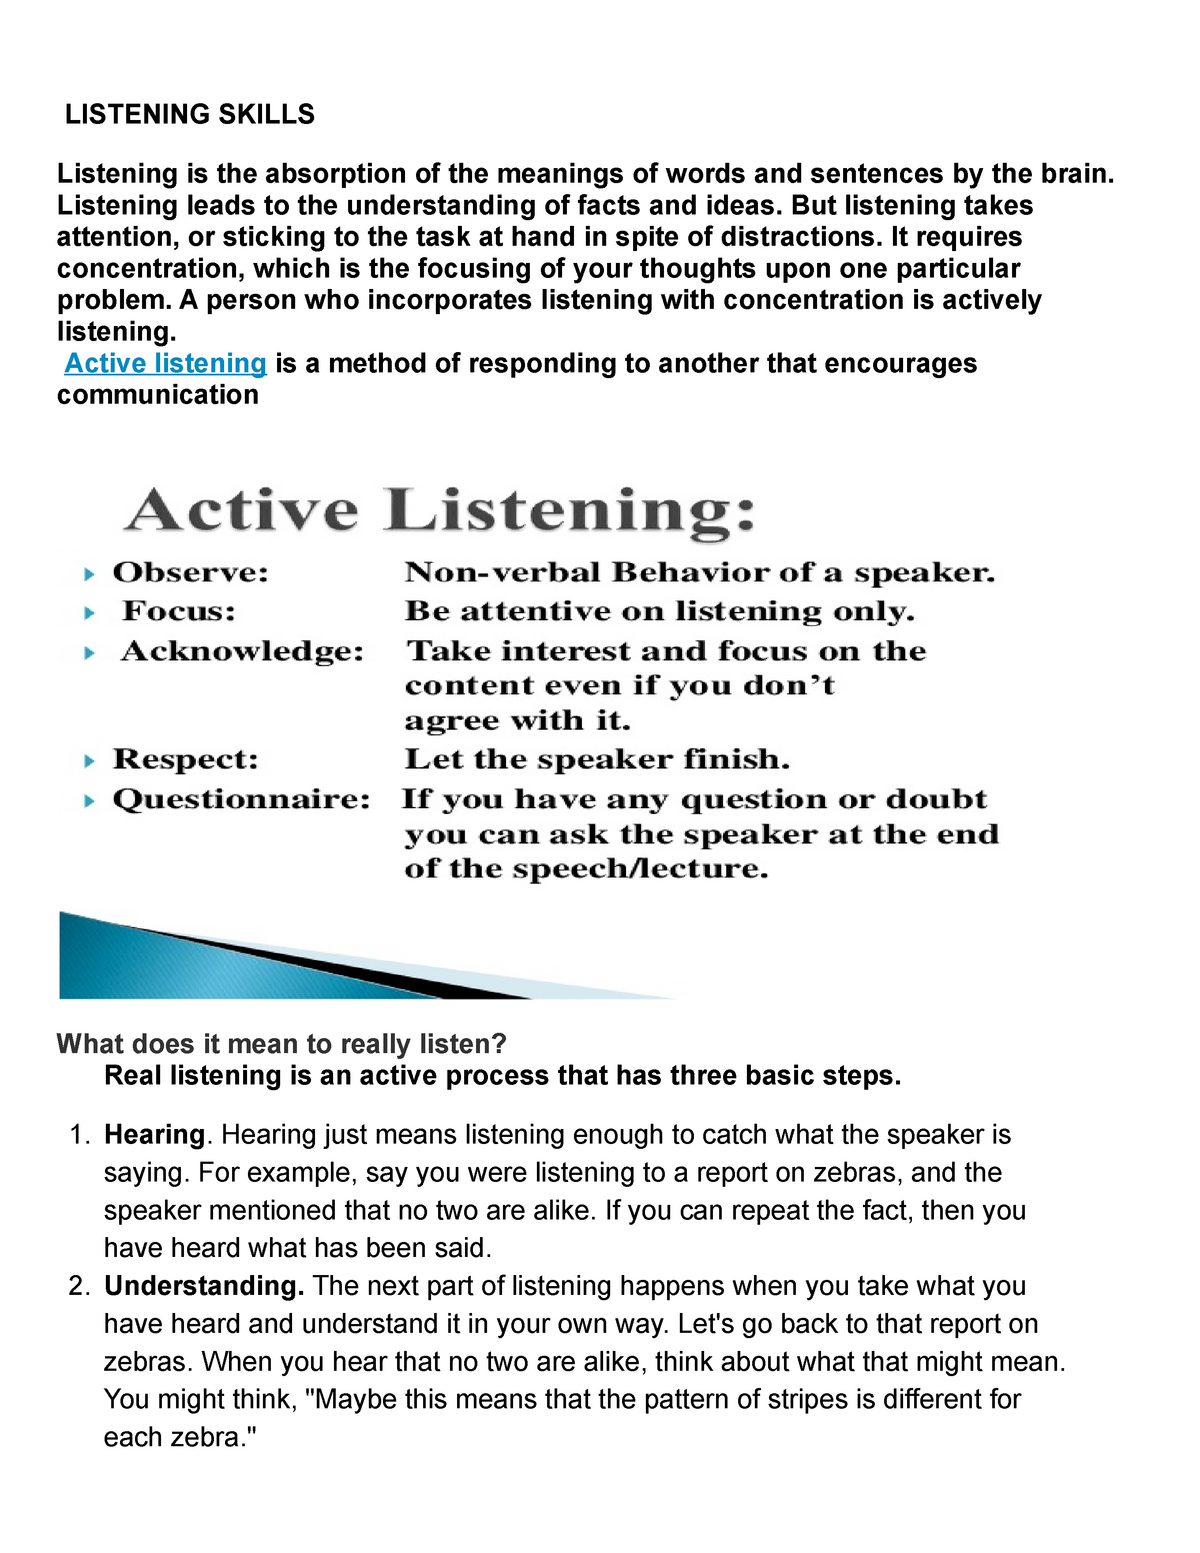 short case study on listening skills